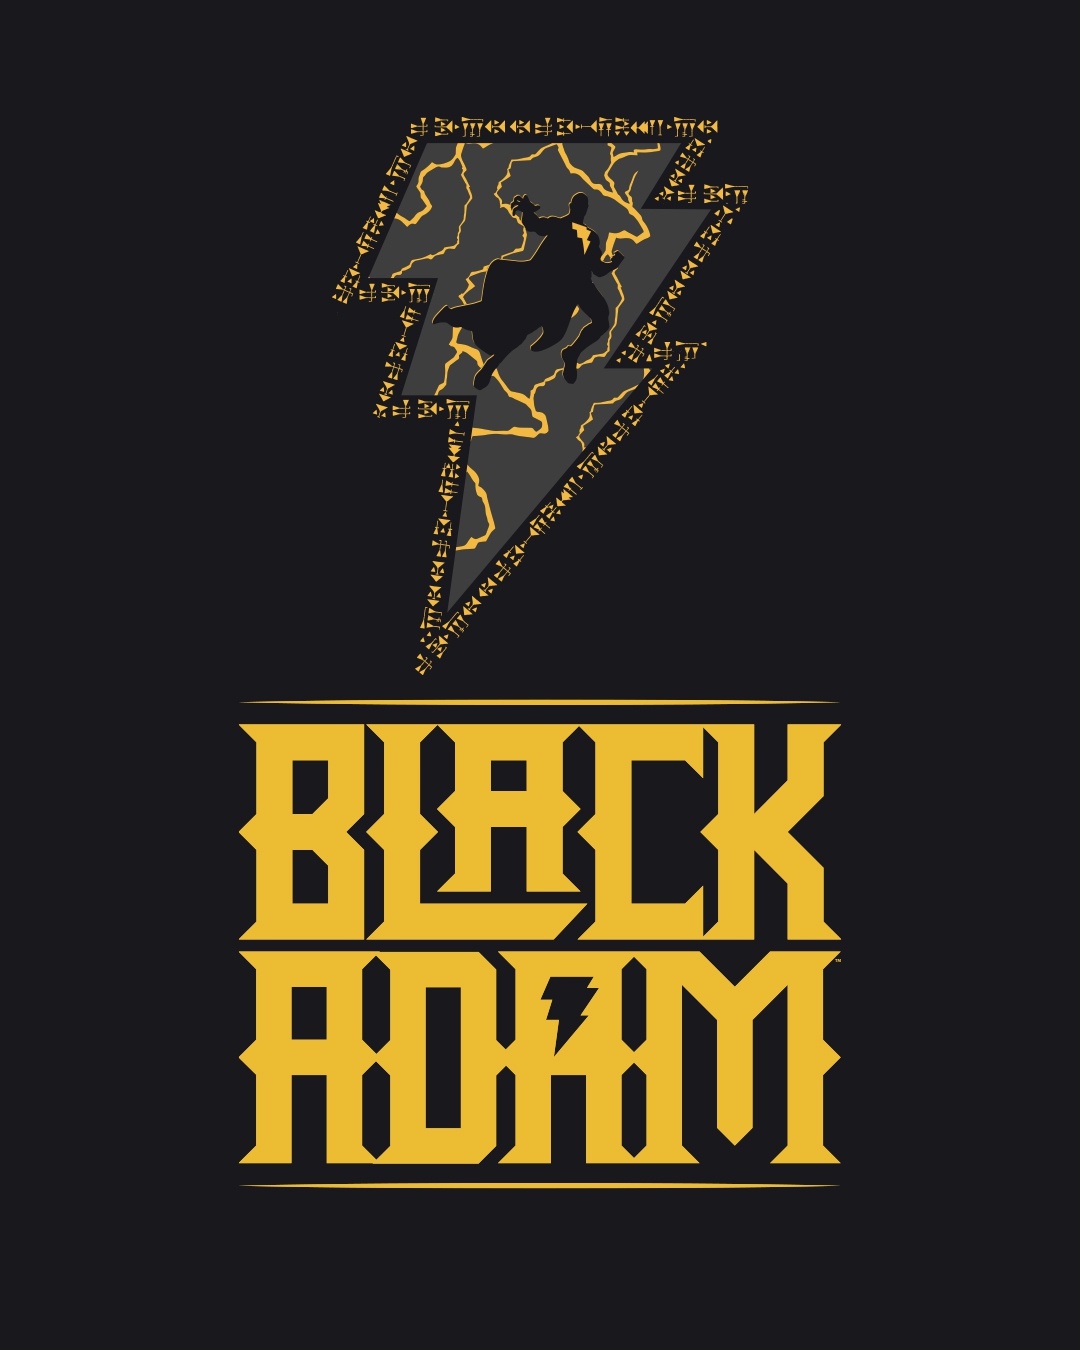 Shop Men's Black The Black Adam Graphic Printed Hooded Sweatshirt